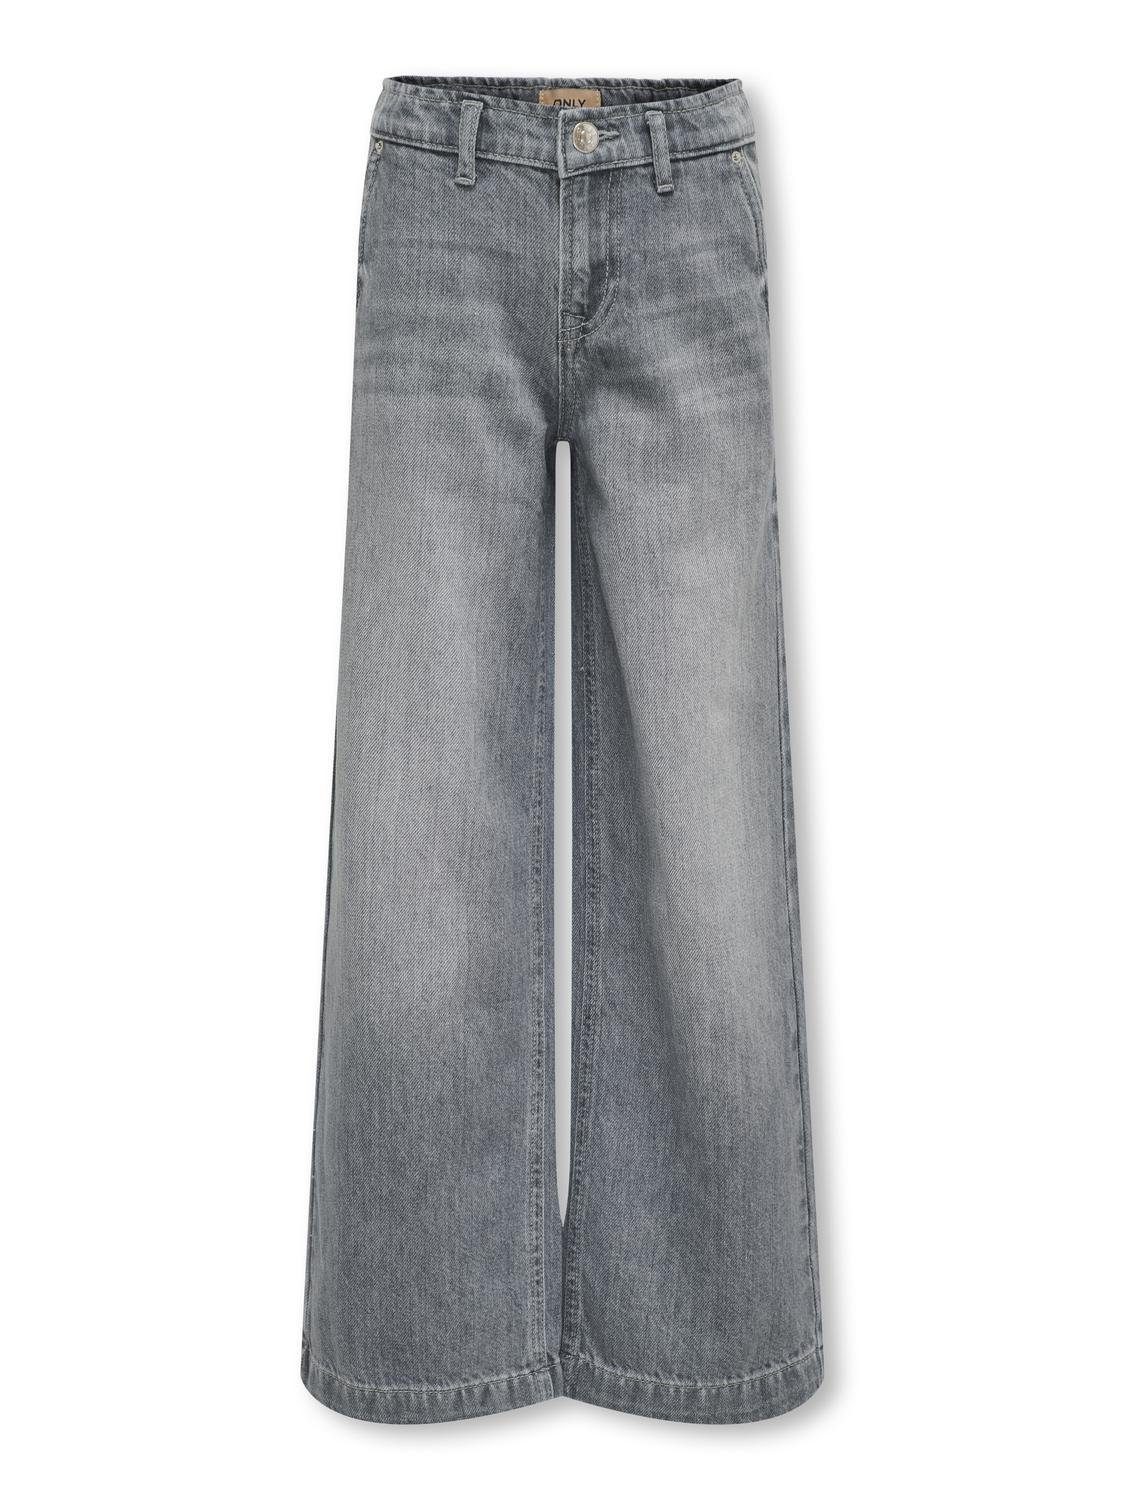 Only KIDS GIRL wide leg jeans medium grey denim Grijs Meisjes Katoen Effen 128